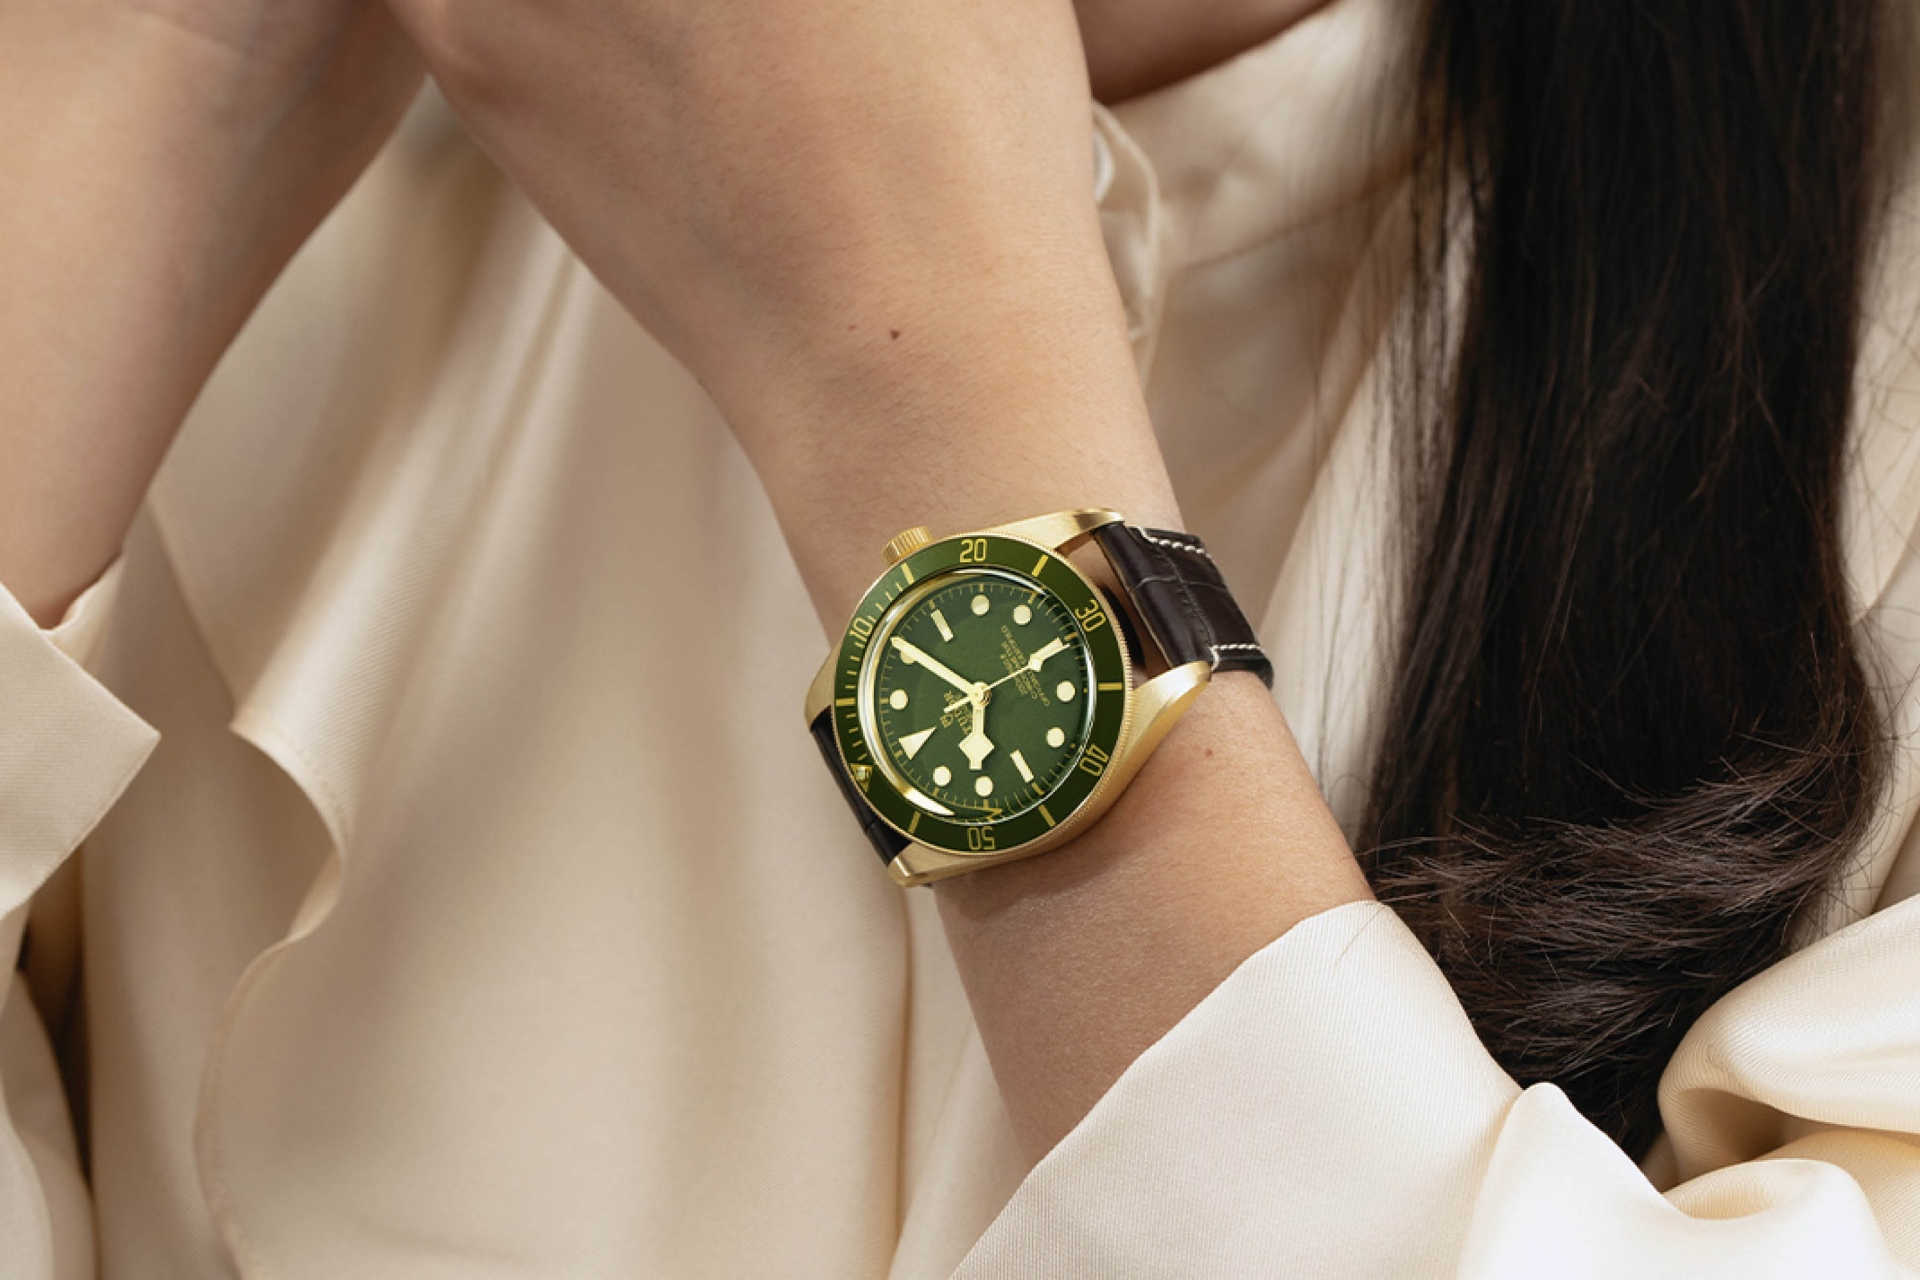 1920x1280-tudor-blackbay-blackbaypro-gmt-luxurywatch-swisswatch4